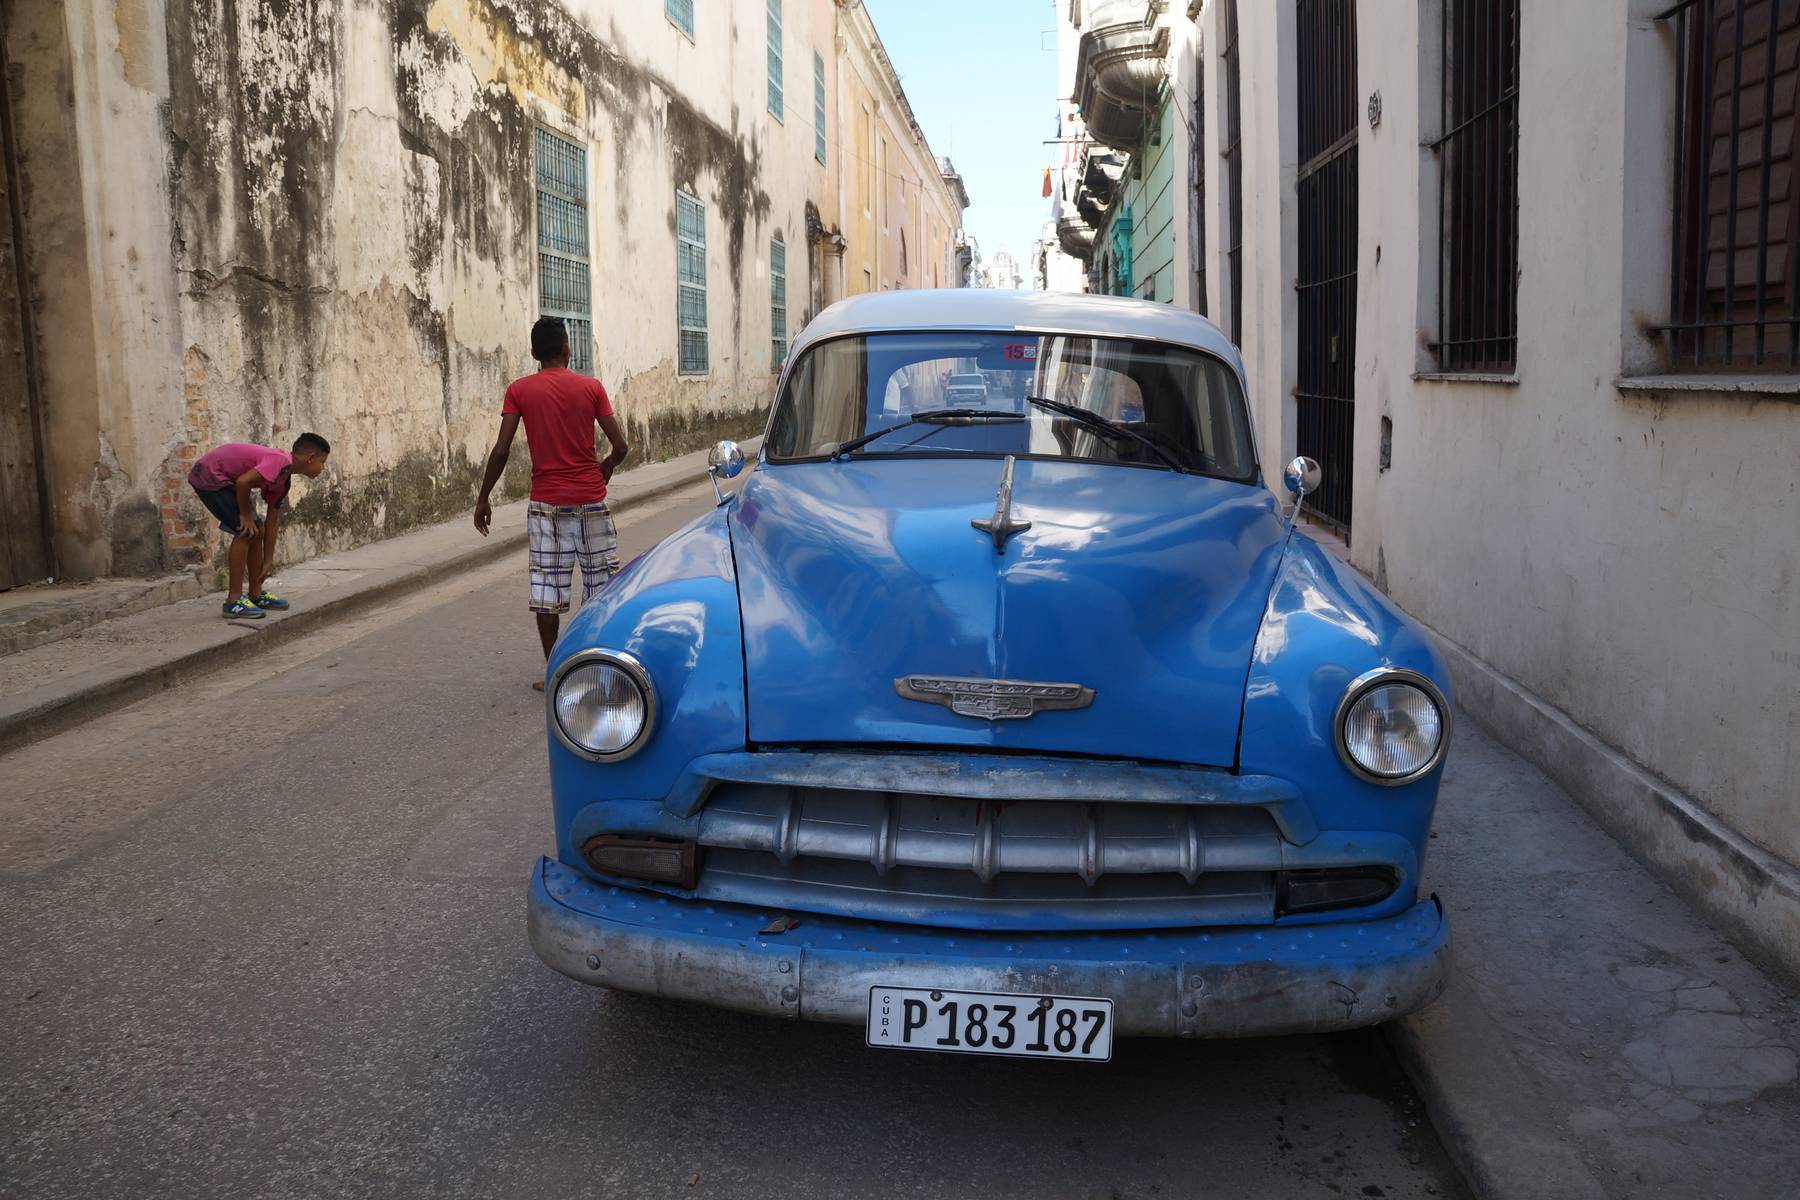 Strosa runt i gamla stan i Havanna